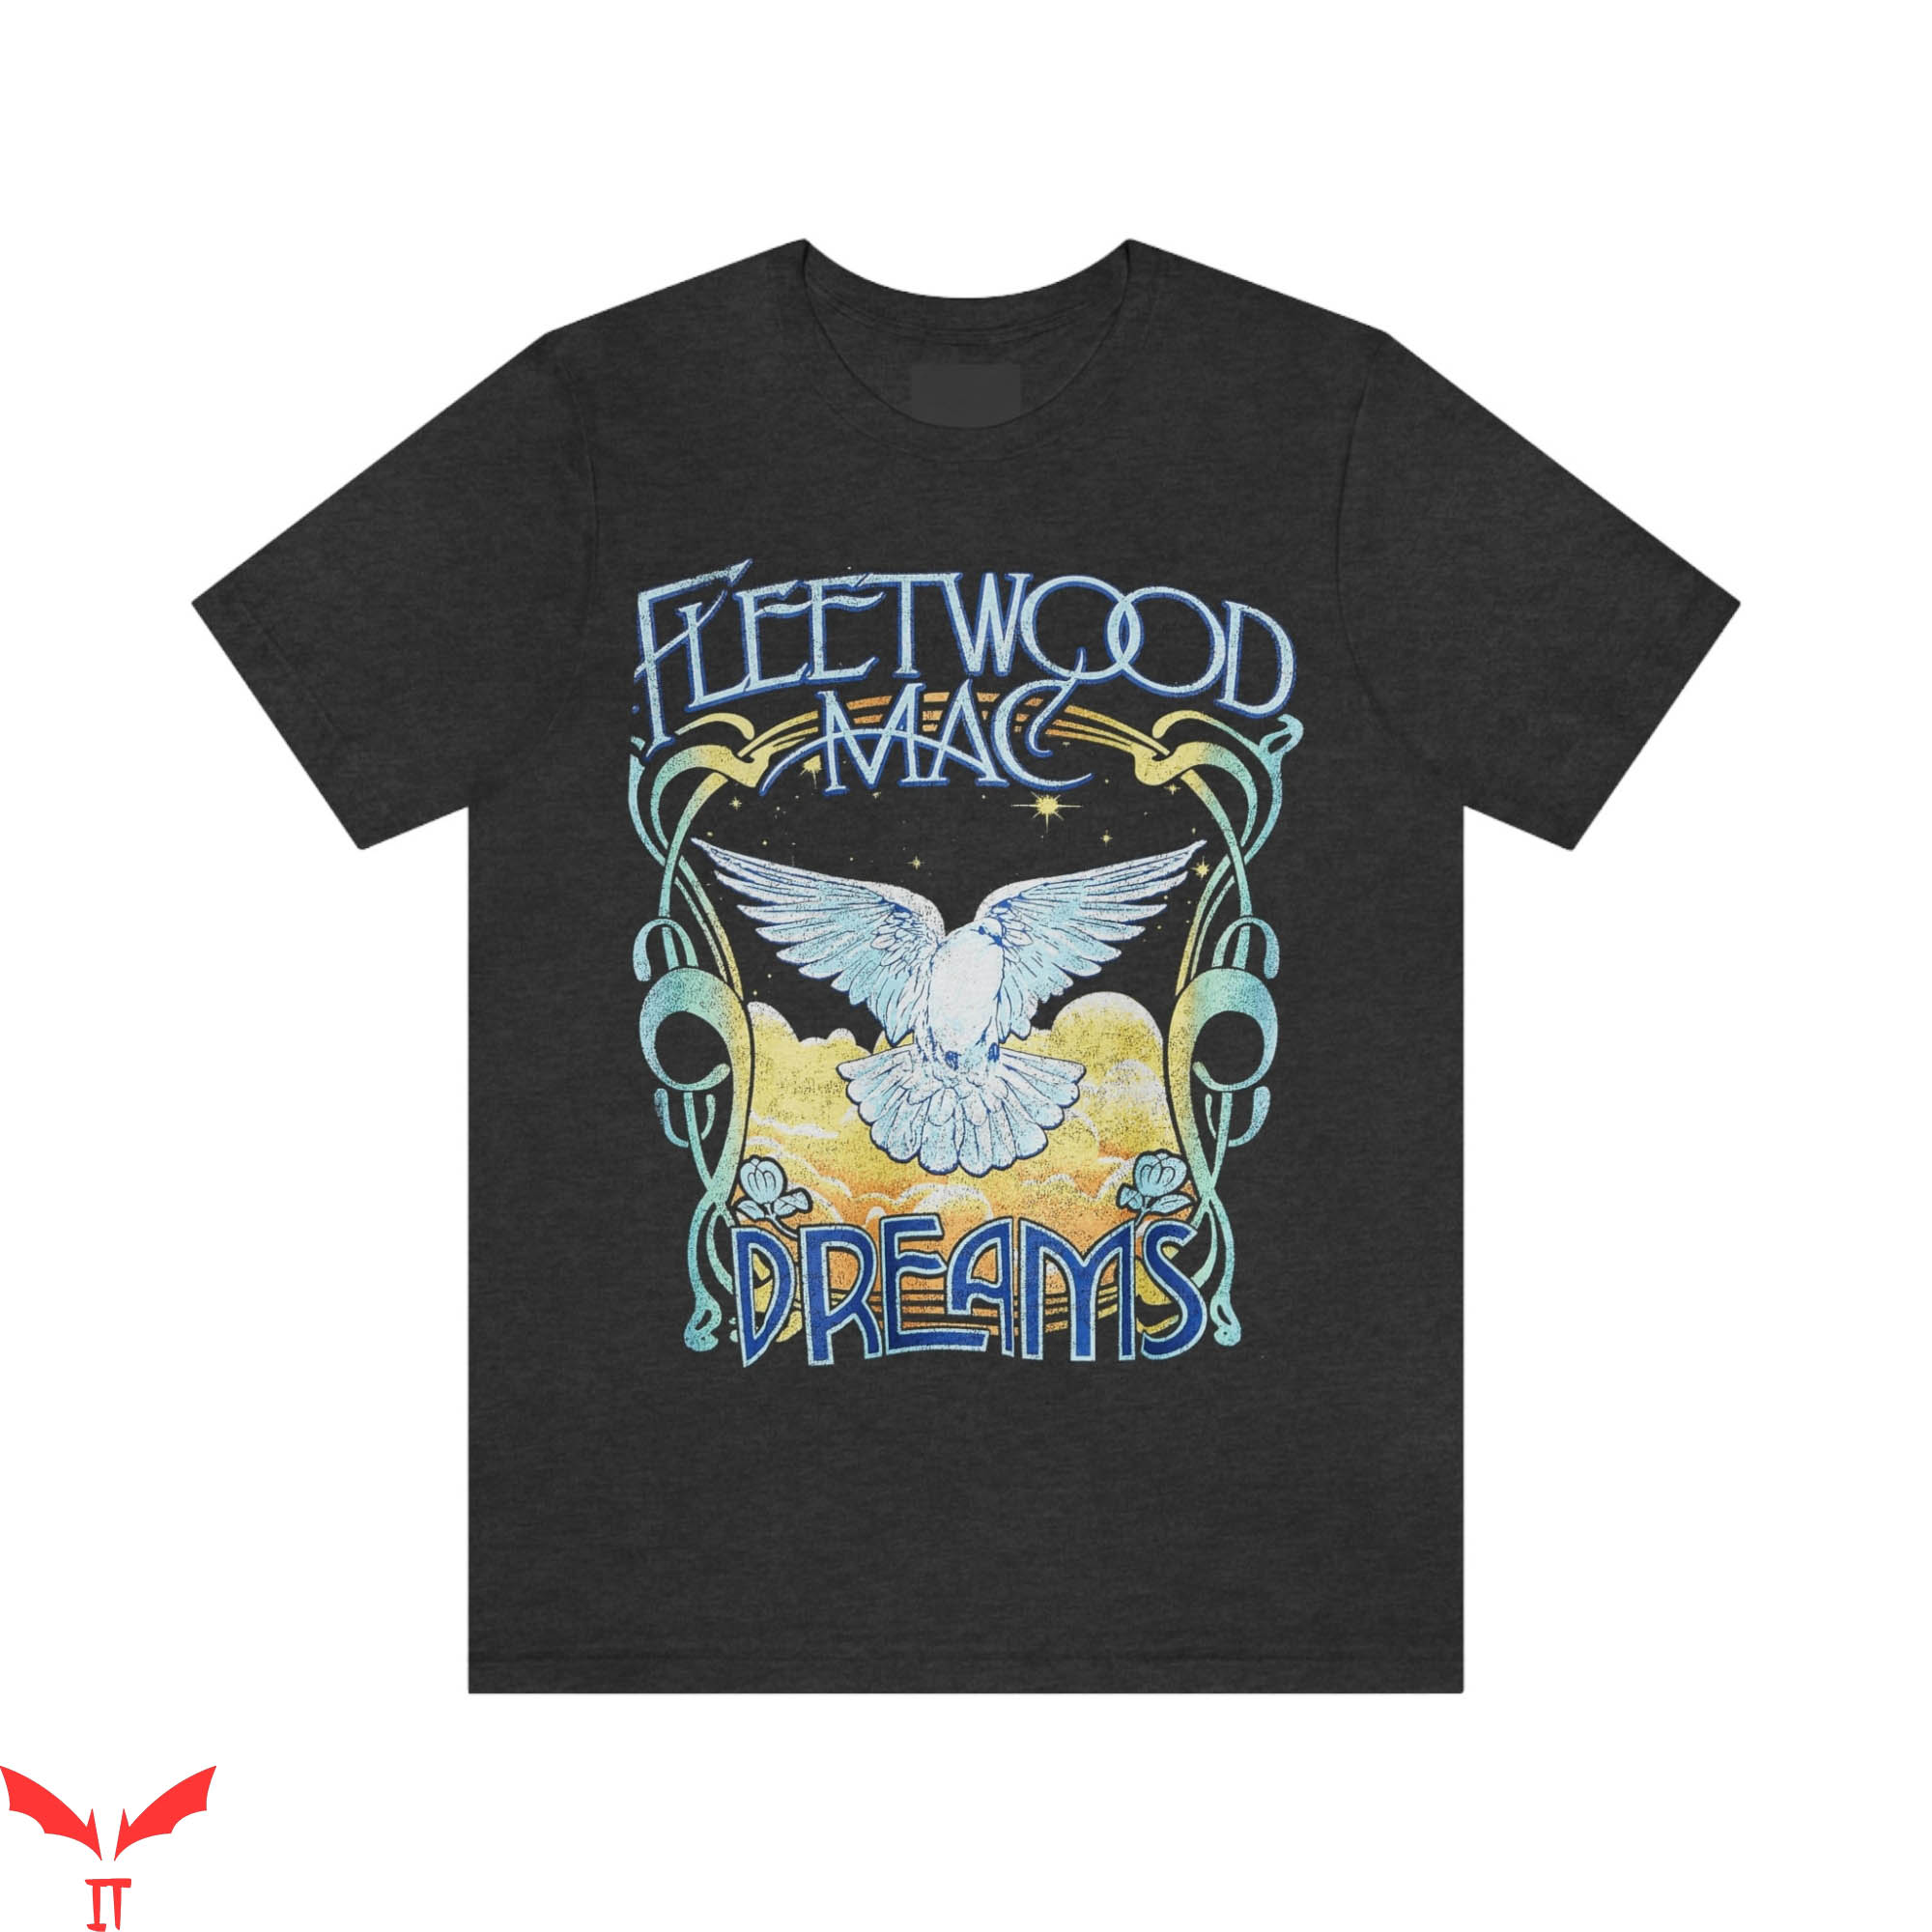 Fleetwood Mac Penguin T-Shirt Rock Band Music Album Tee